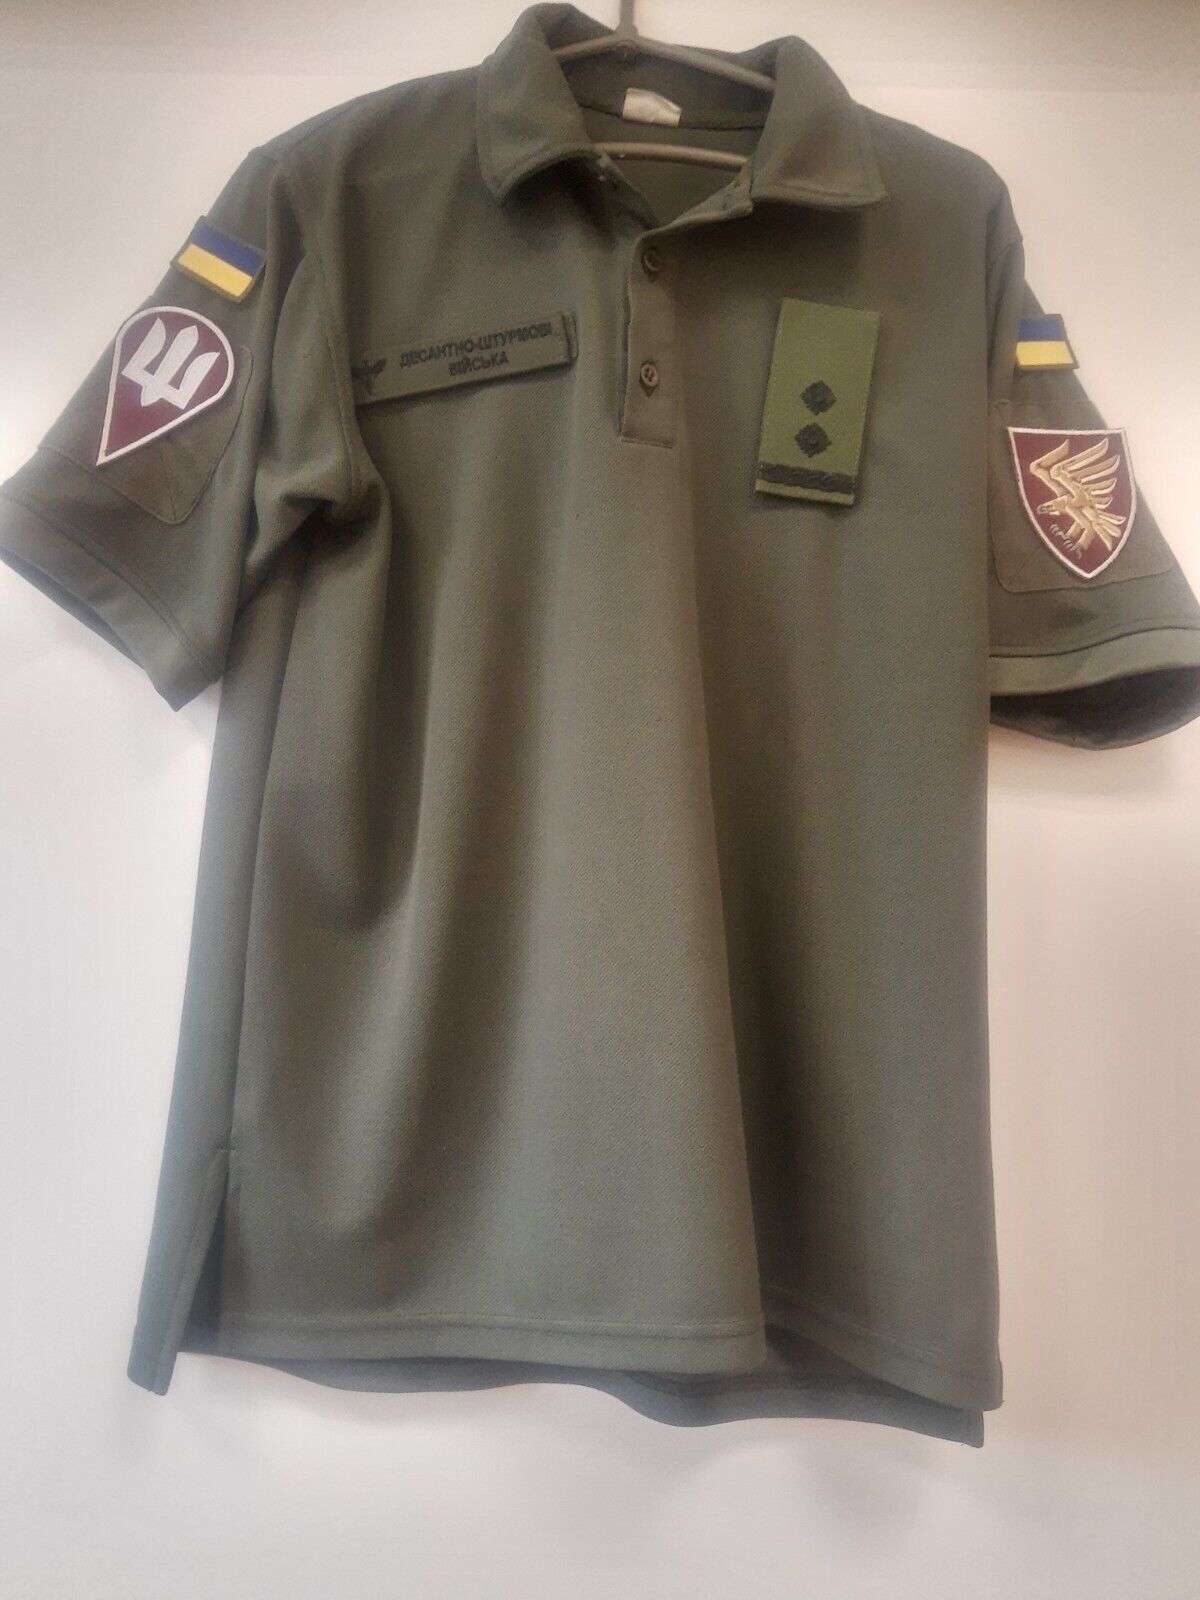  Ukrainian Army Military Uniform  T-shirt Polo Olive Jacket Armed Forces Ukraine